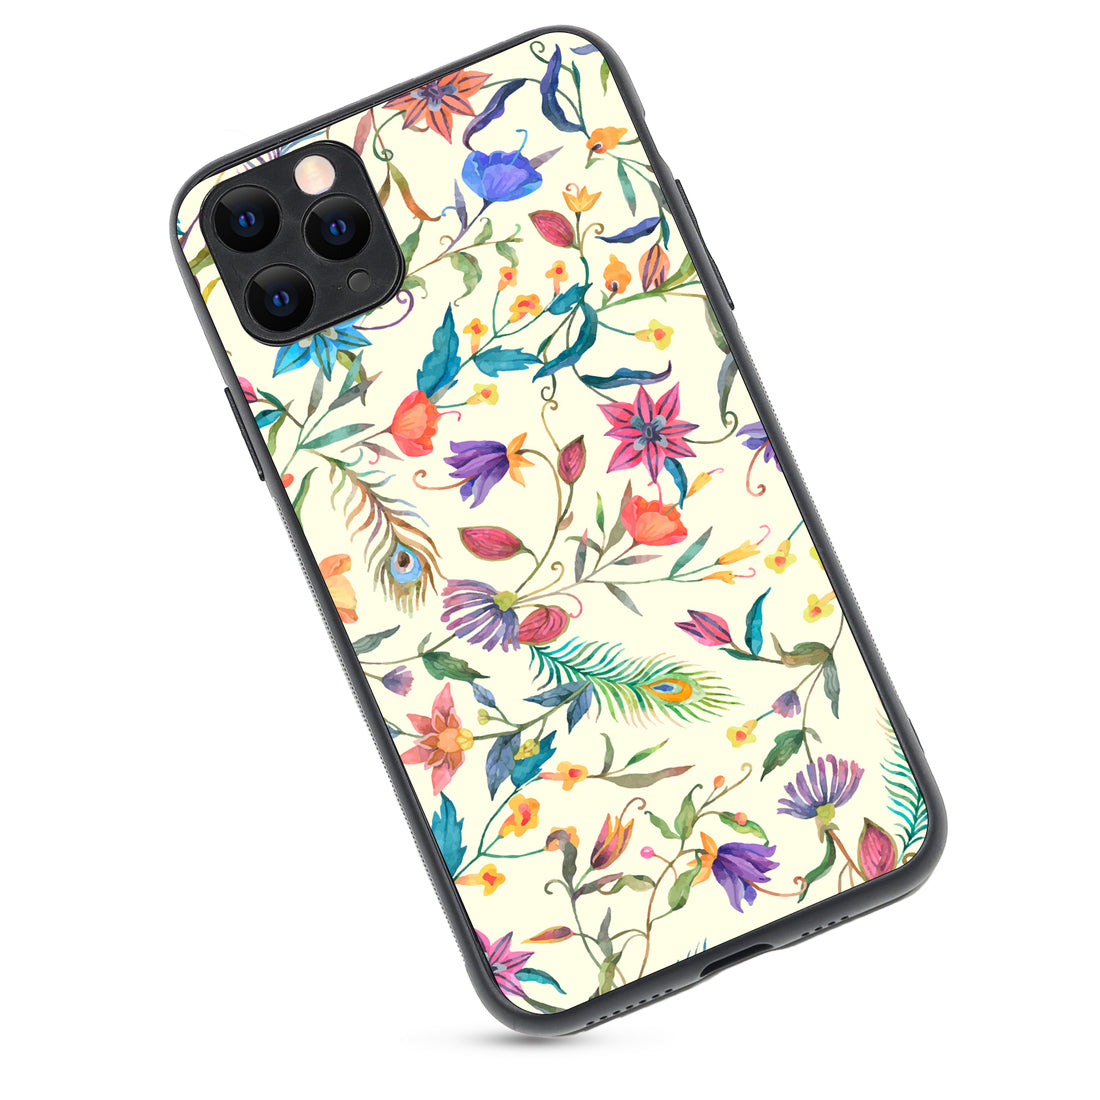 White Doodle Floral iPhone 11 Pro Max Case